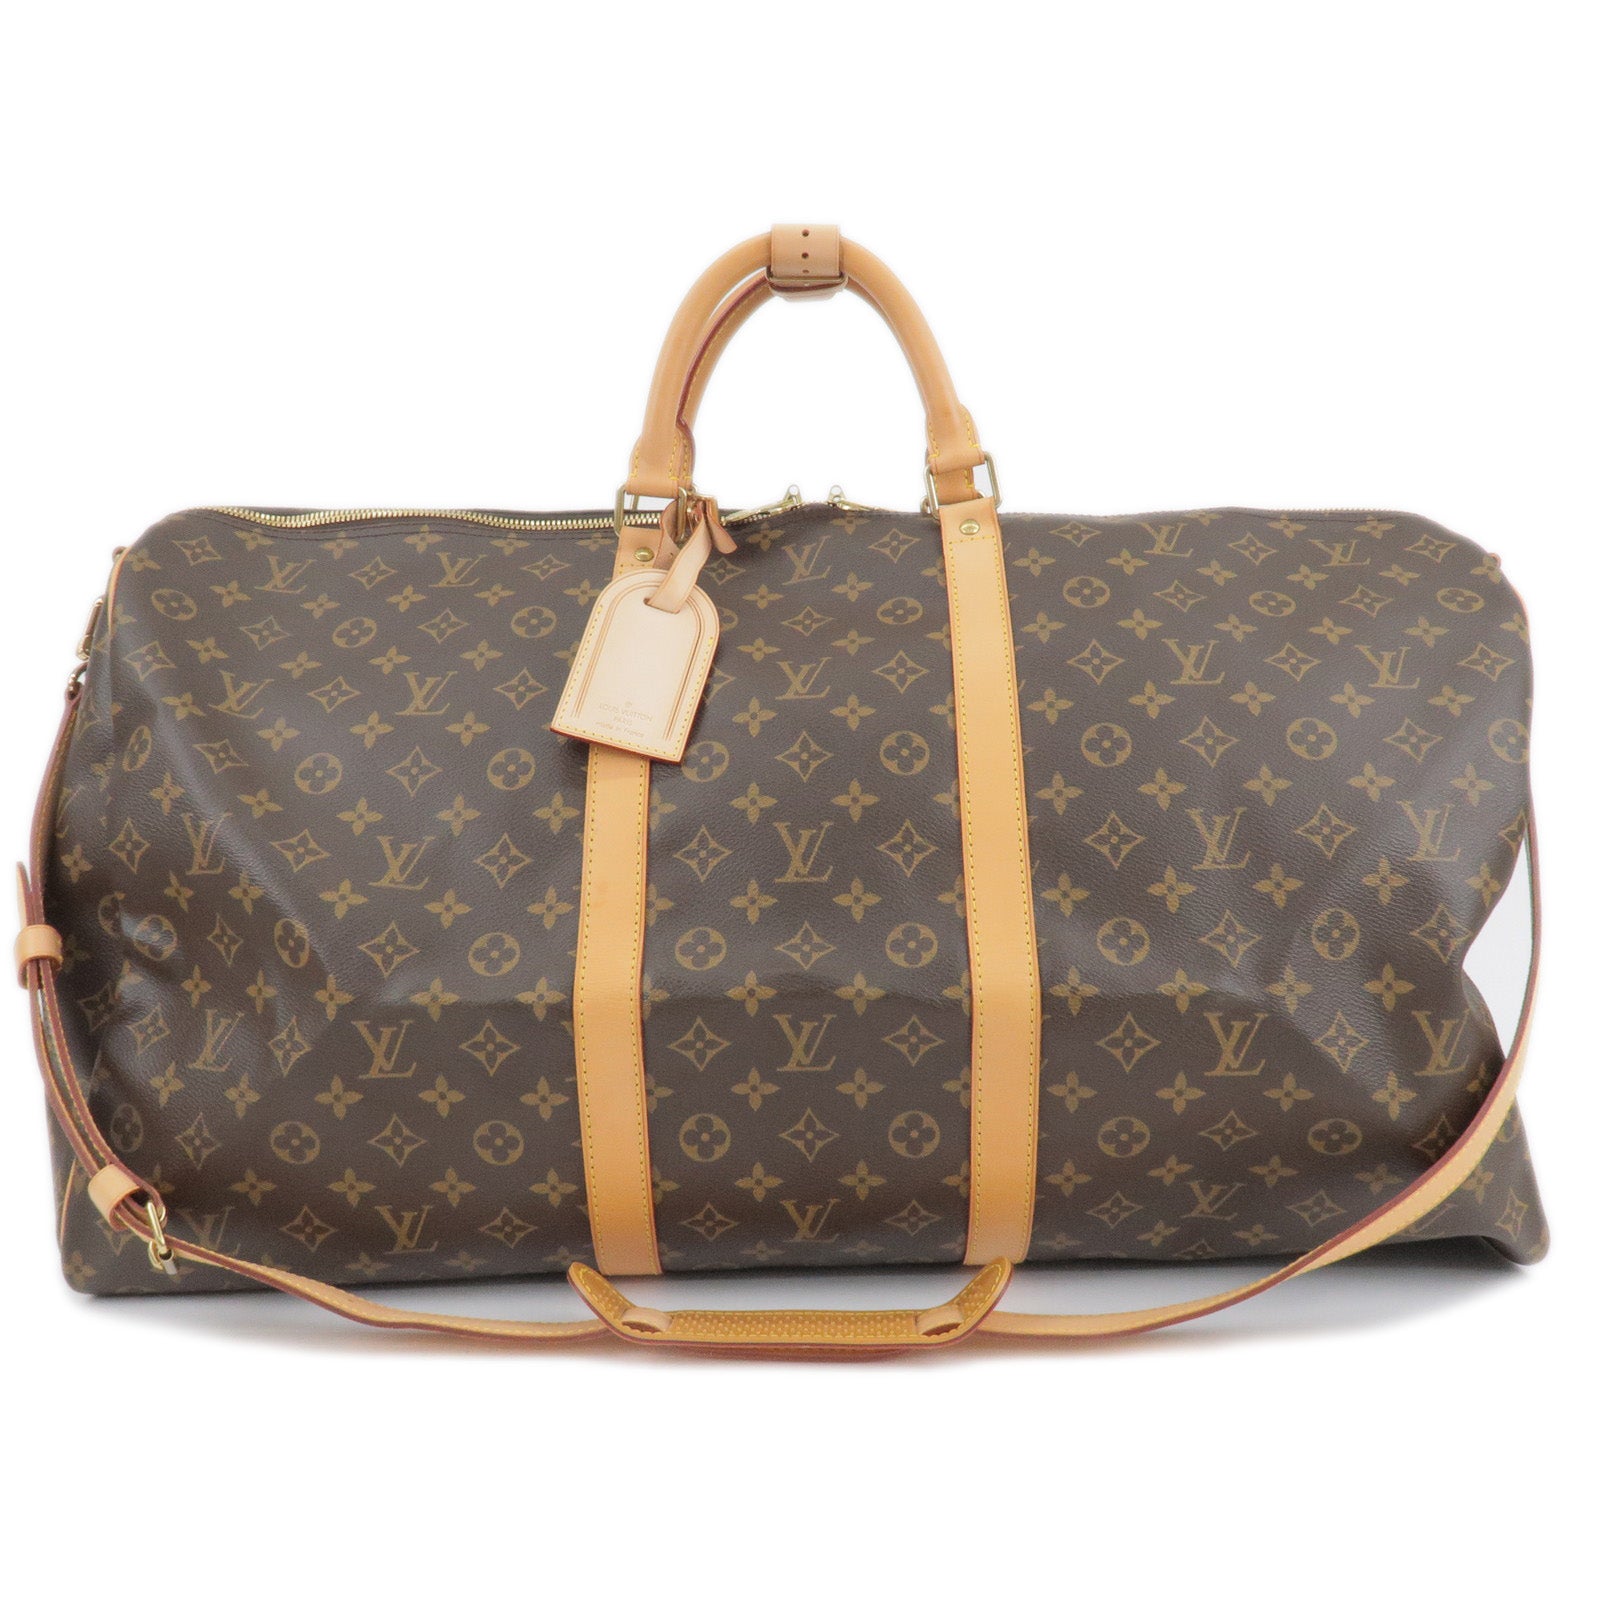 Louis Vuitton Beautiful Keepall travel bag 60 in custom